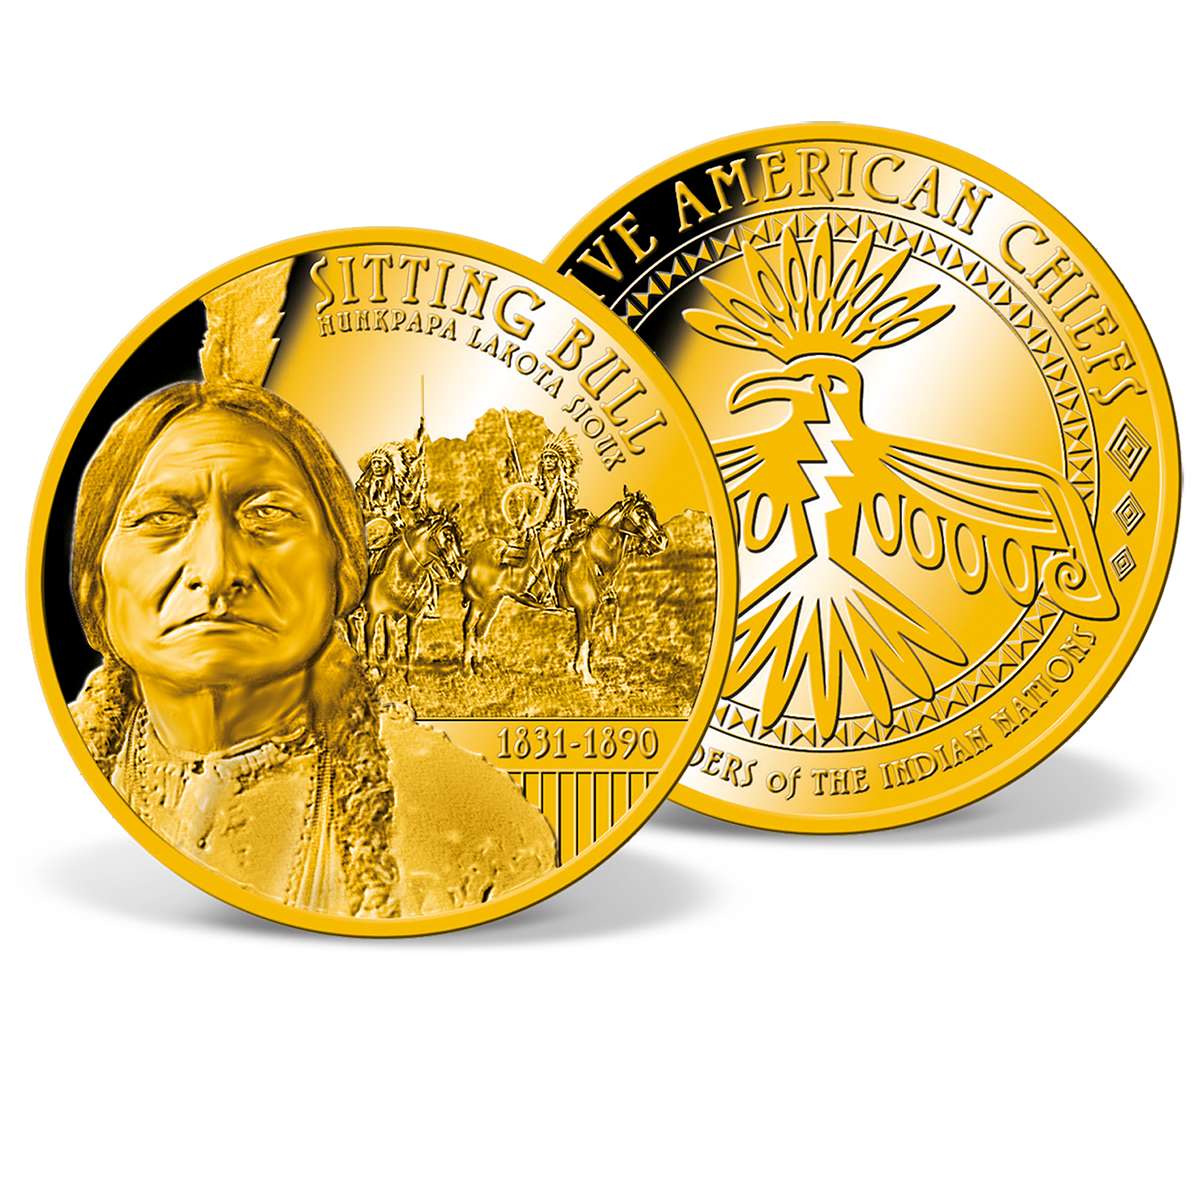 Sitting Bull Commemorative Coin